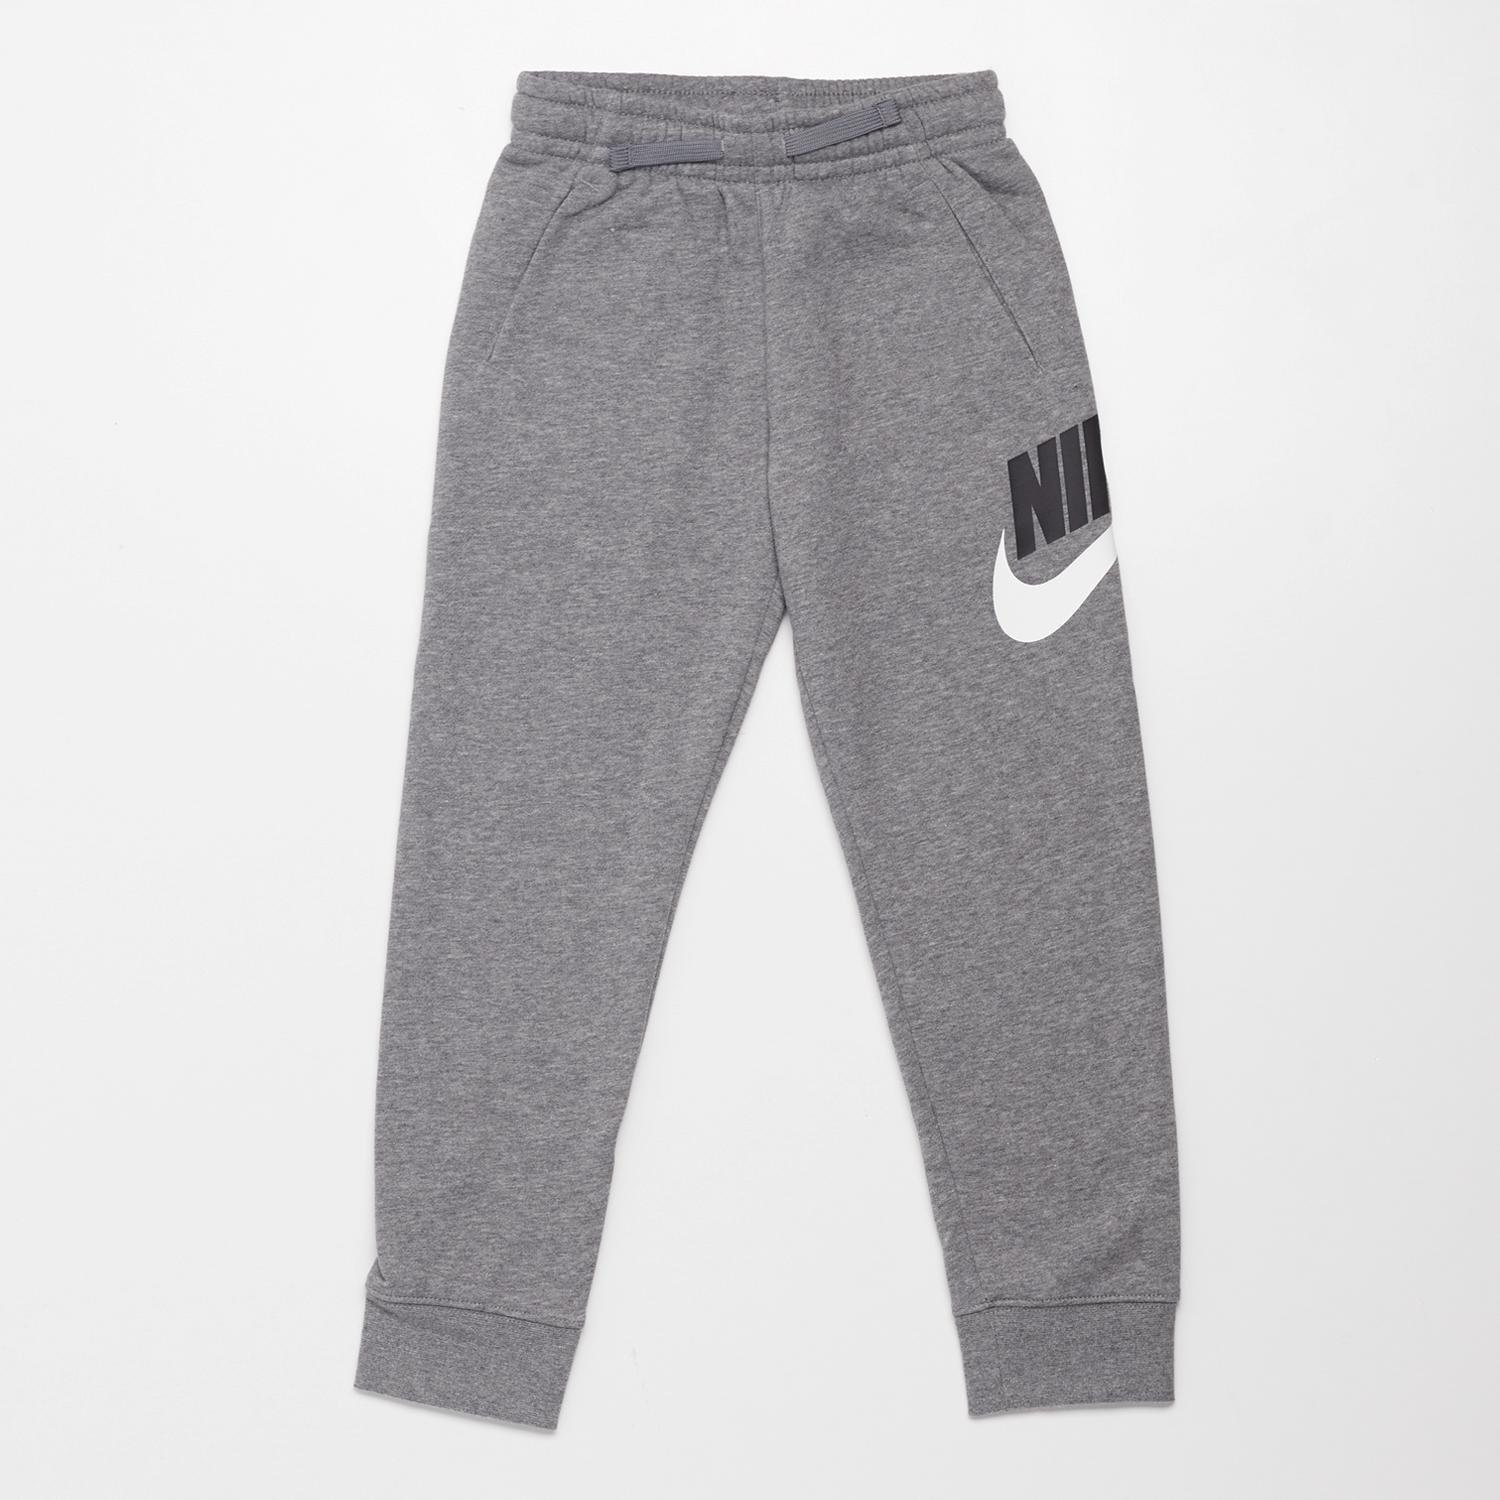 Nike Nike joggingbroek grijs kindern kinderen